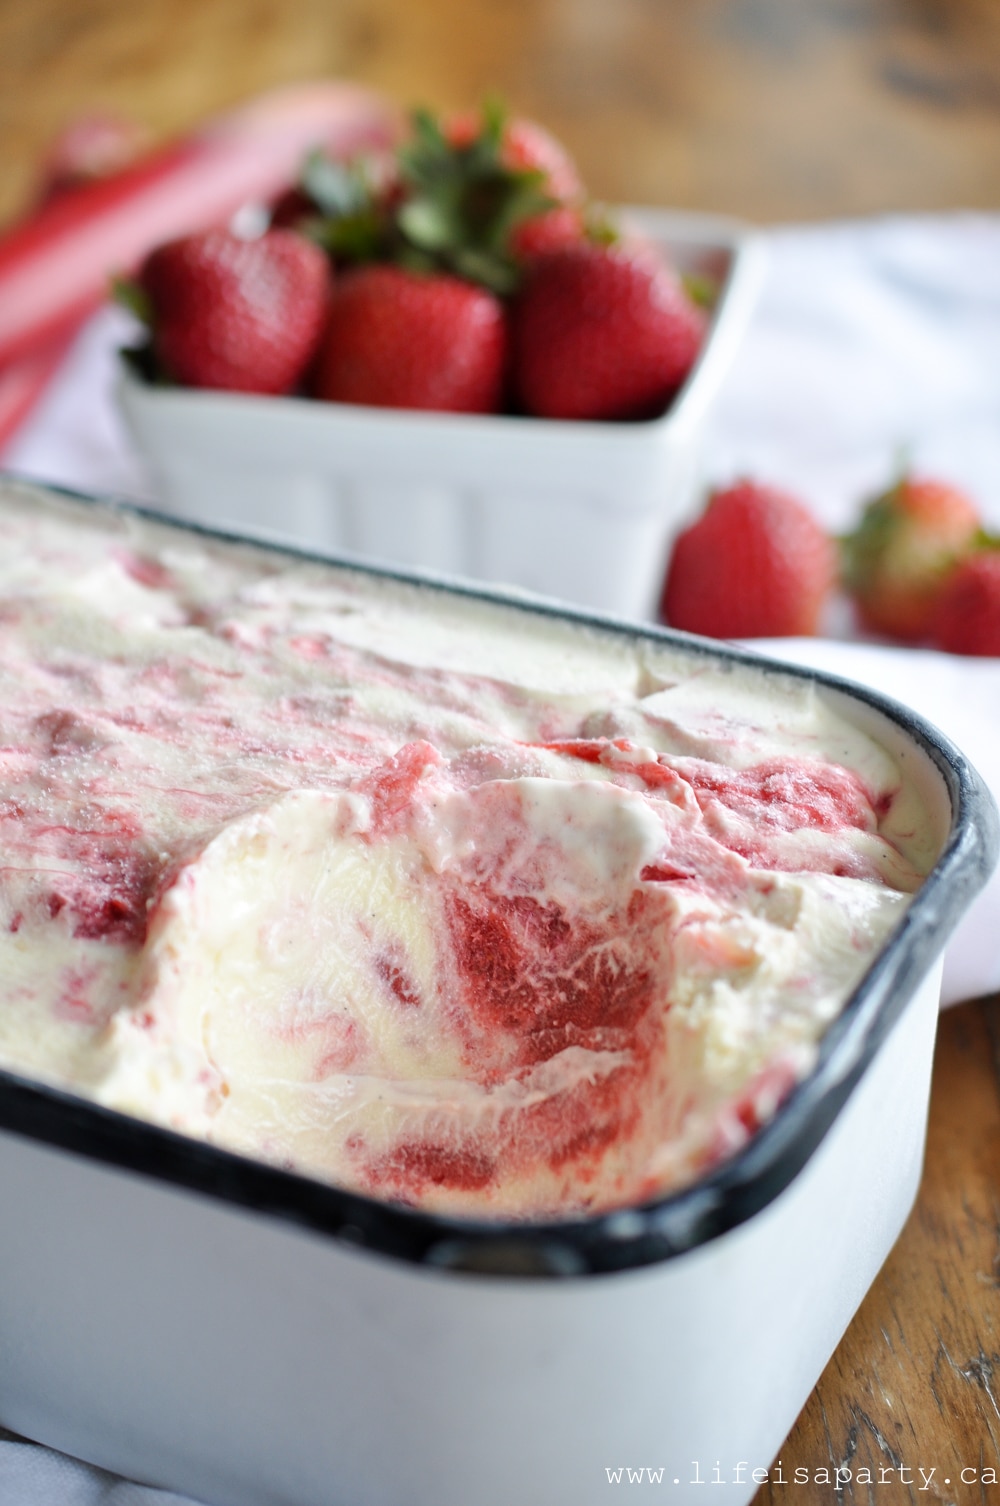 Homemade Rhubarb and Strawberry Ice Cream Recipe